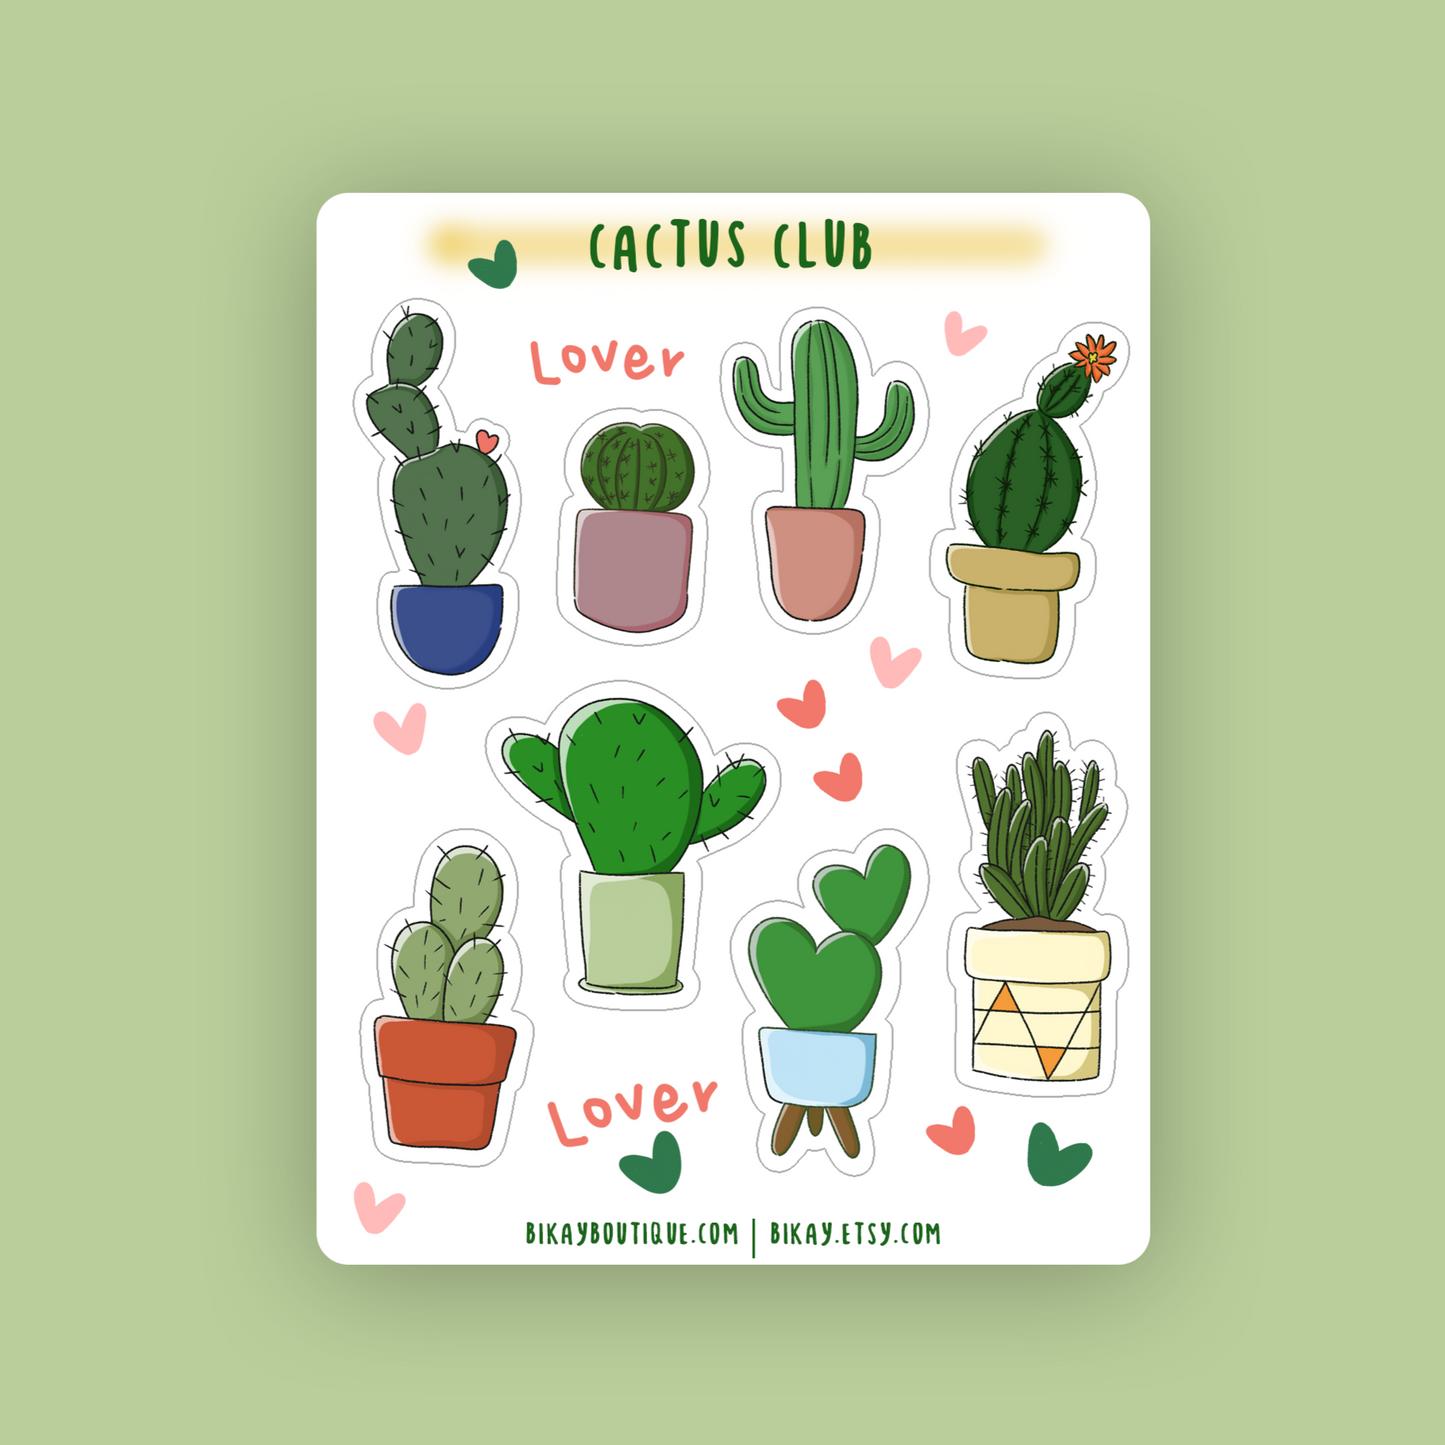 Cactus Club Sitcker Sheet